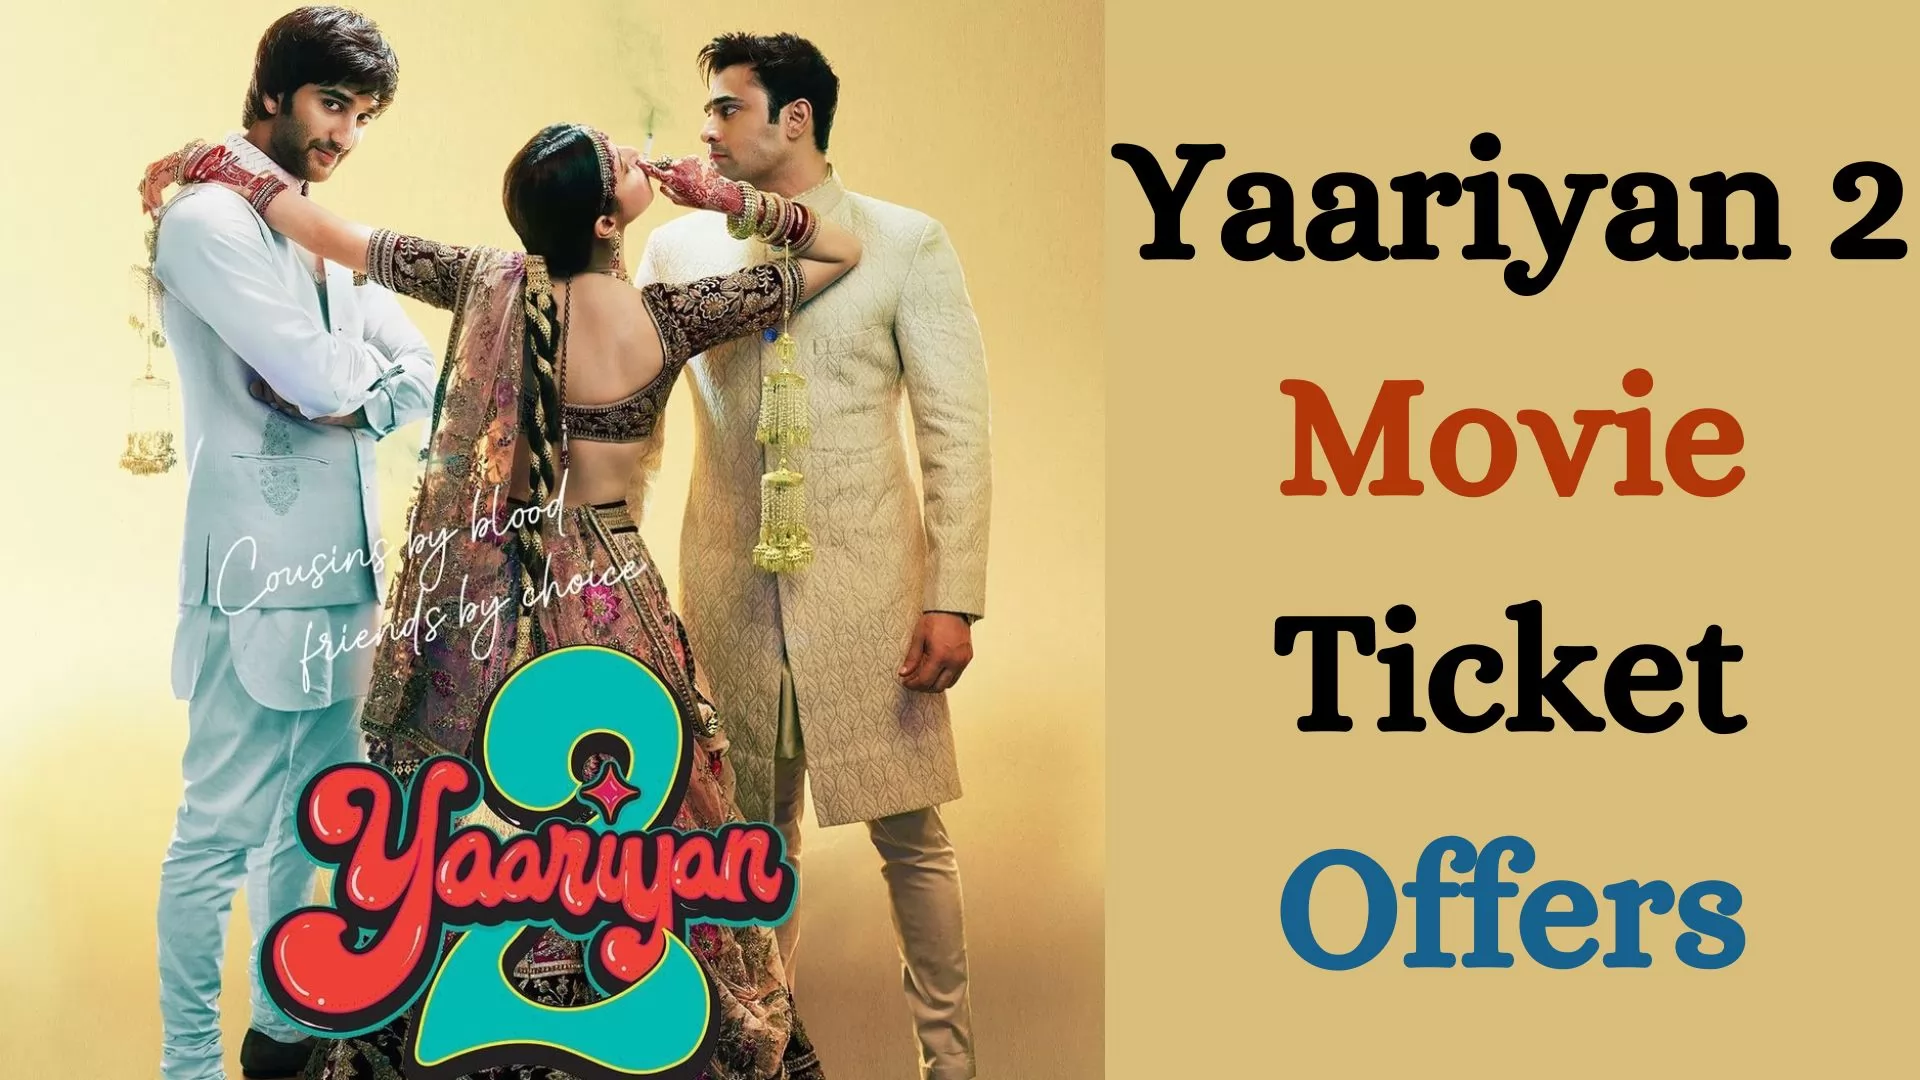 Yaariyan 2 Movie Ticket Offers